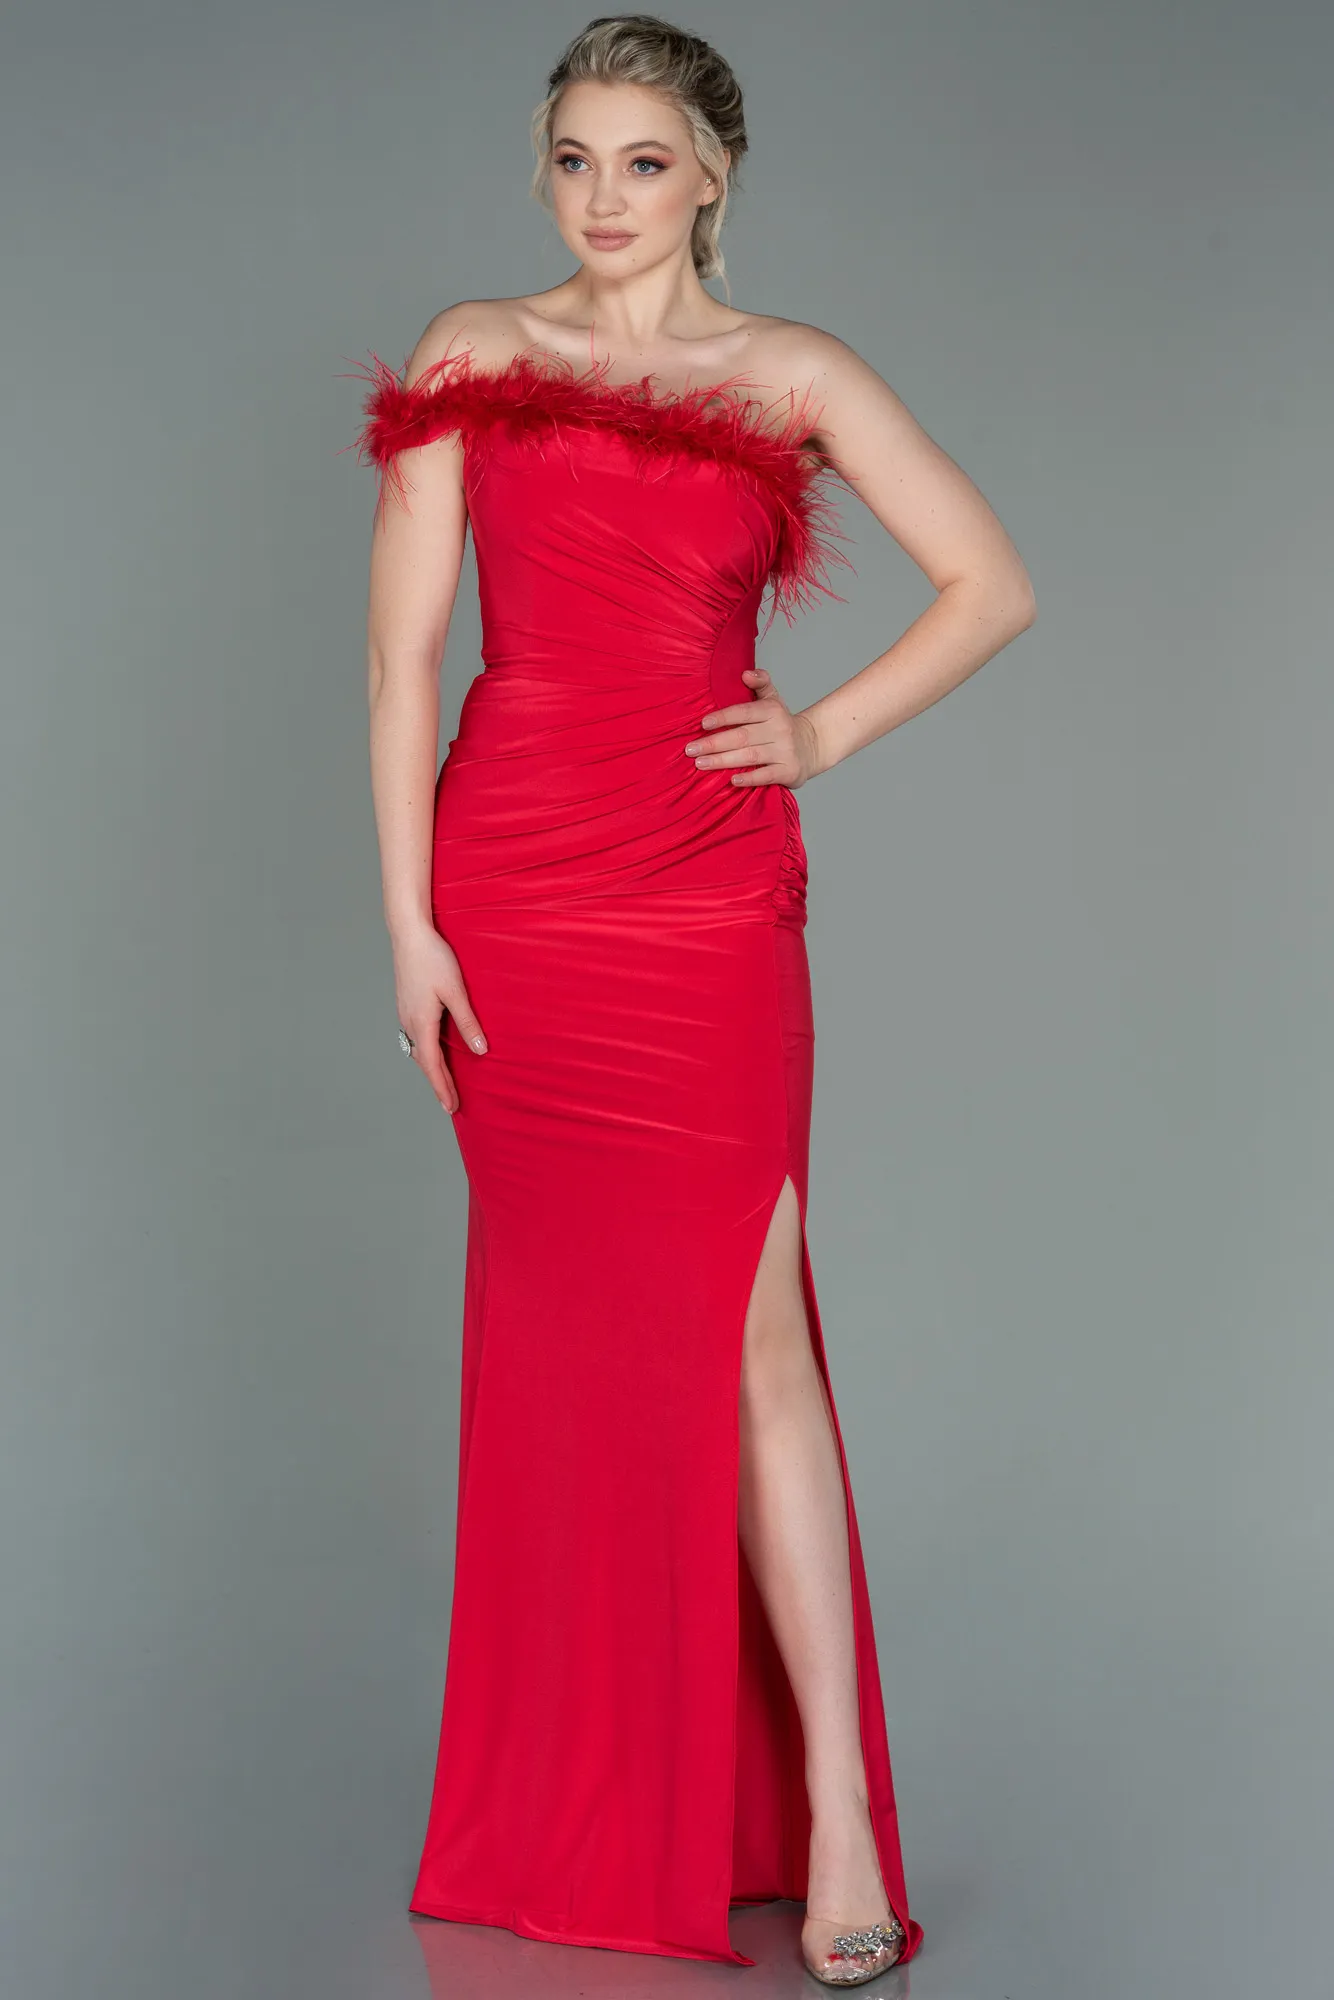 Red-Long Mermaid Evening Dress ABU3048